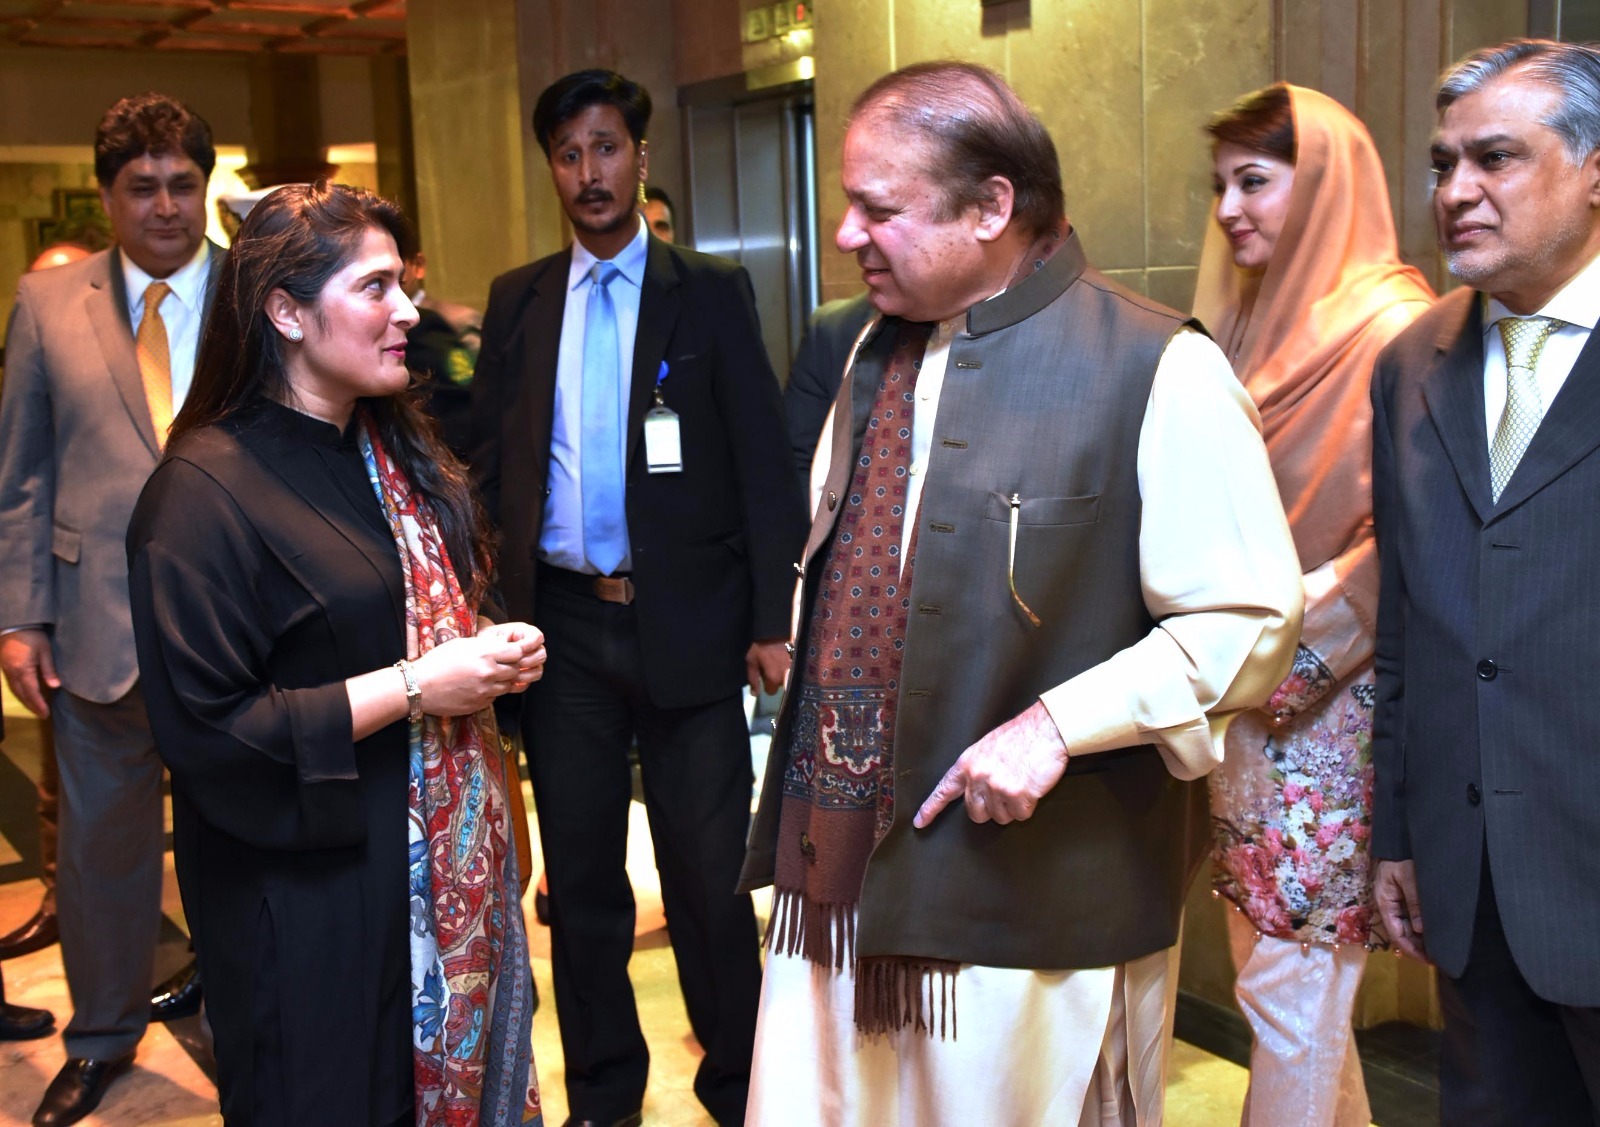 Prime Minister of Pakistan Nawaz Sharif and Academy Award Winning Filmmaker Sharmeen Obaid Chinoy in conversation post-screening